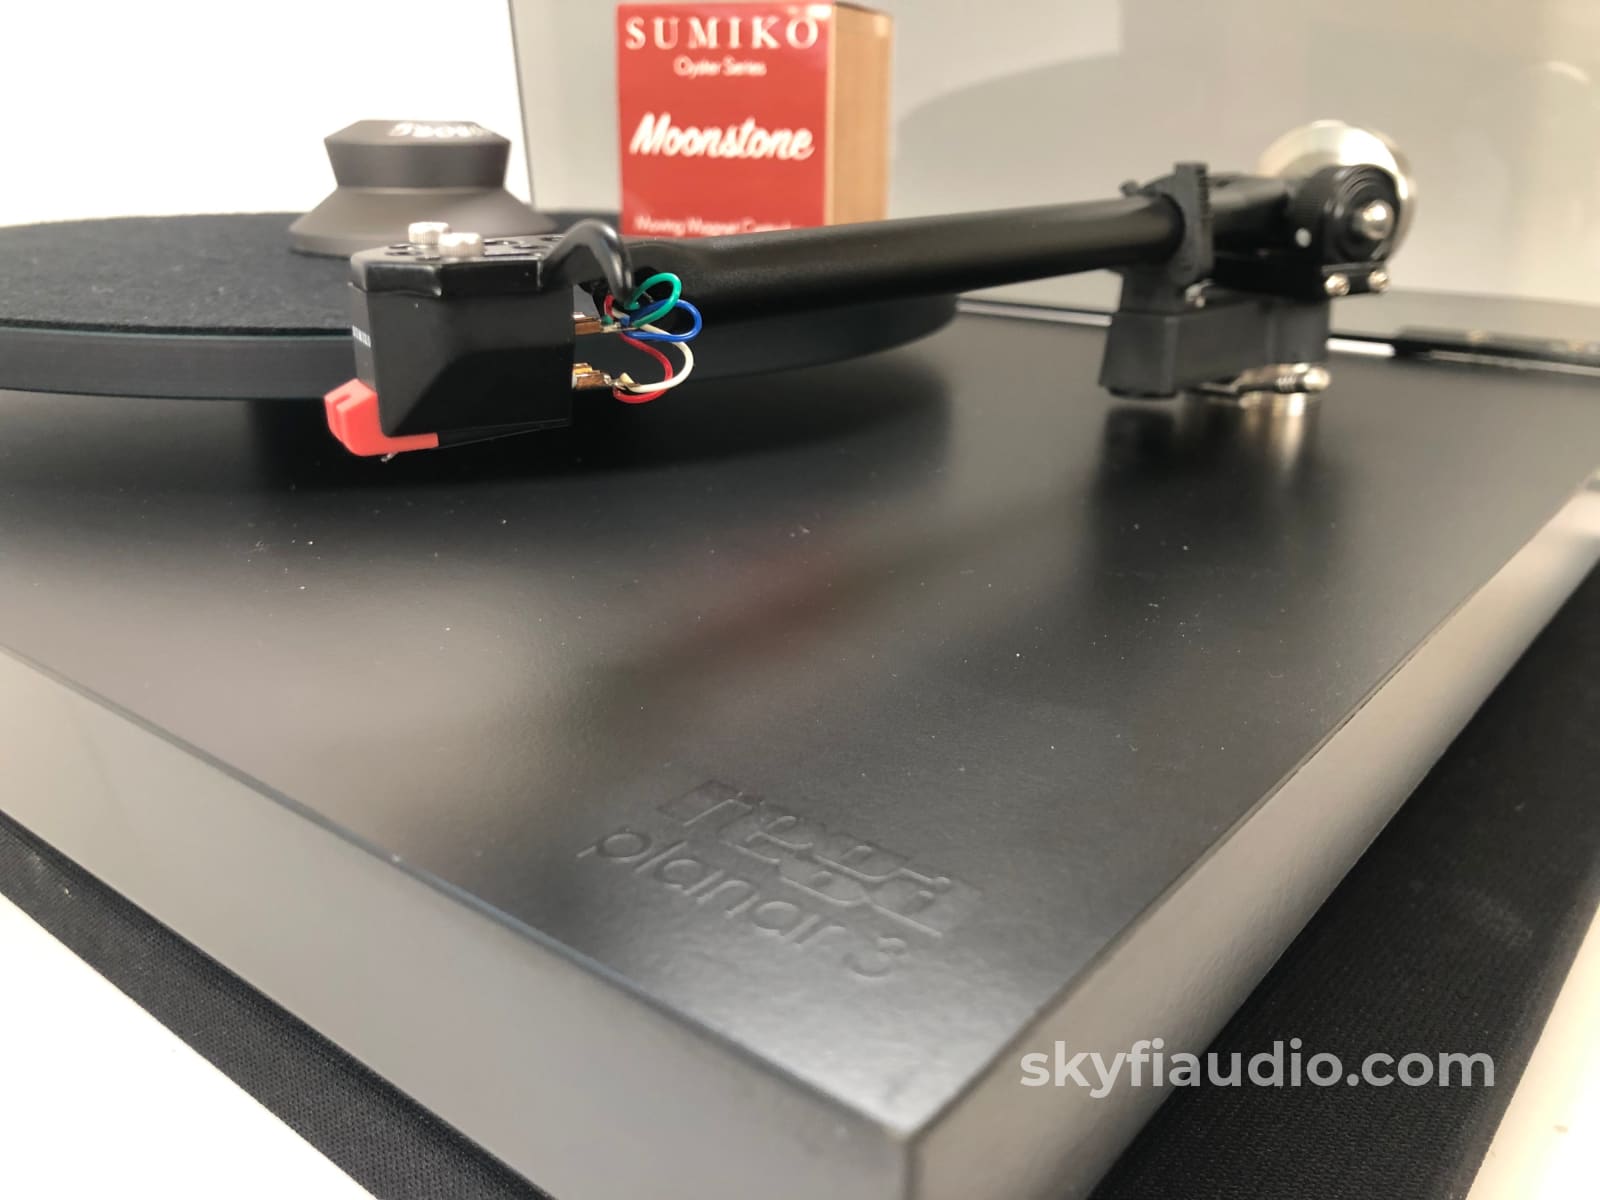 Rega Planar 3 (P3) Iconic Turntable With New Sumiko Cartridge